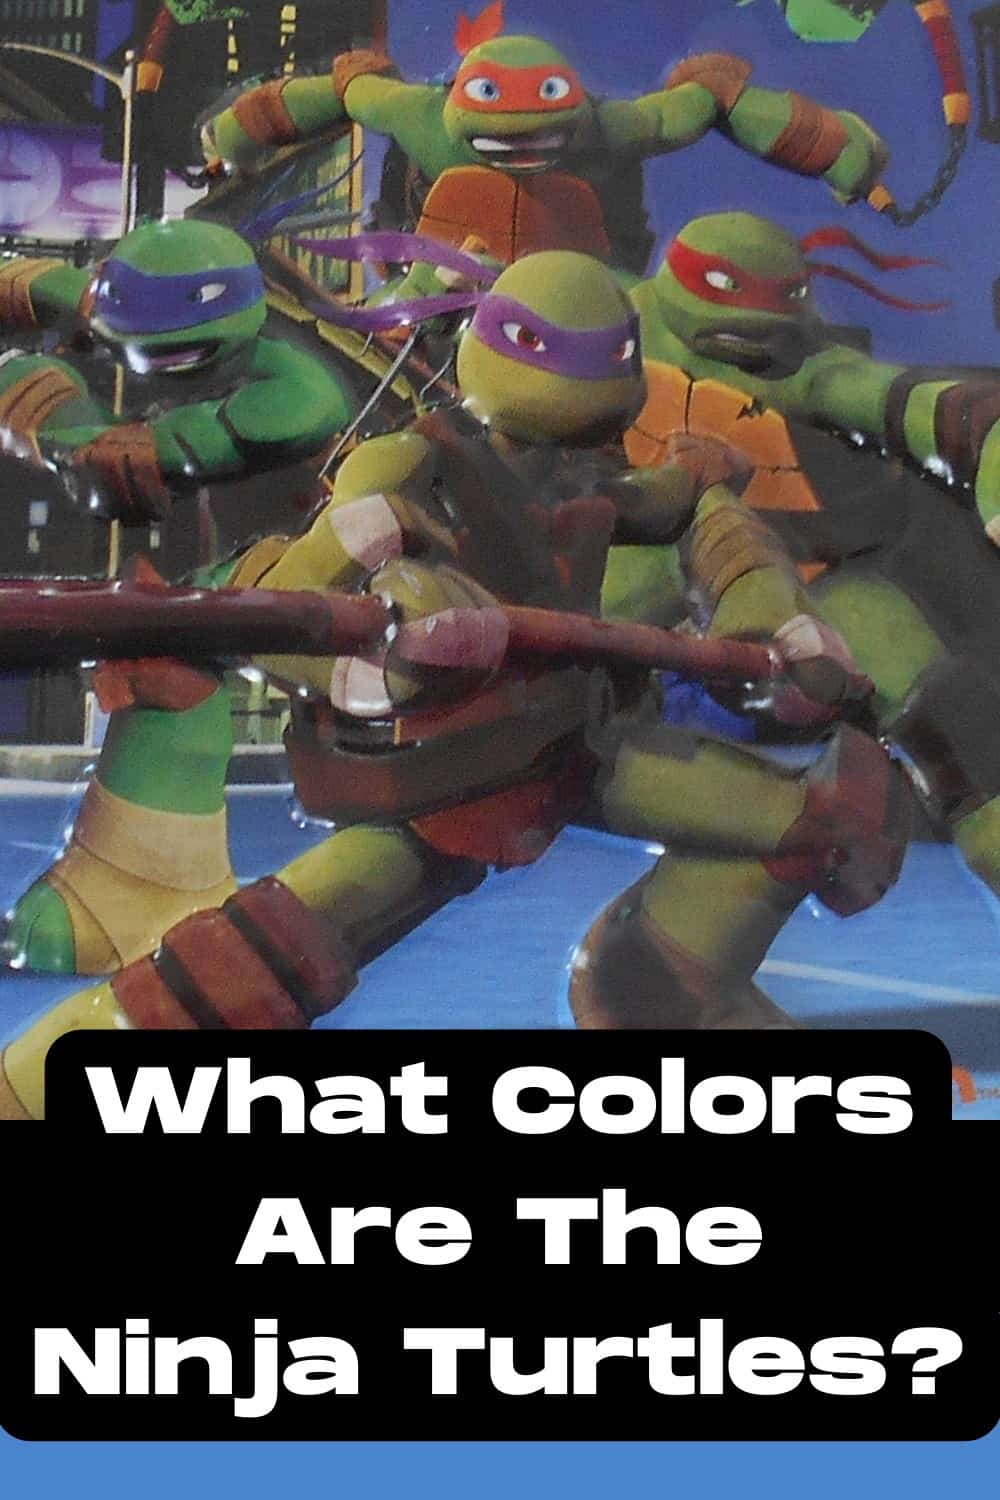 The Teenage Mutant Ninja Turtles were originally all red